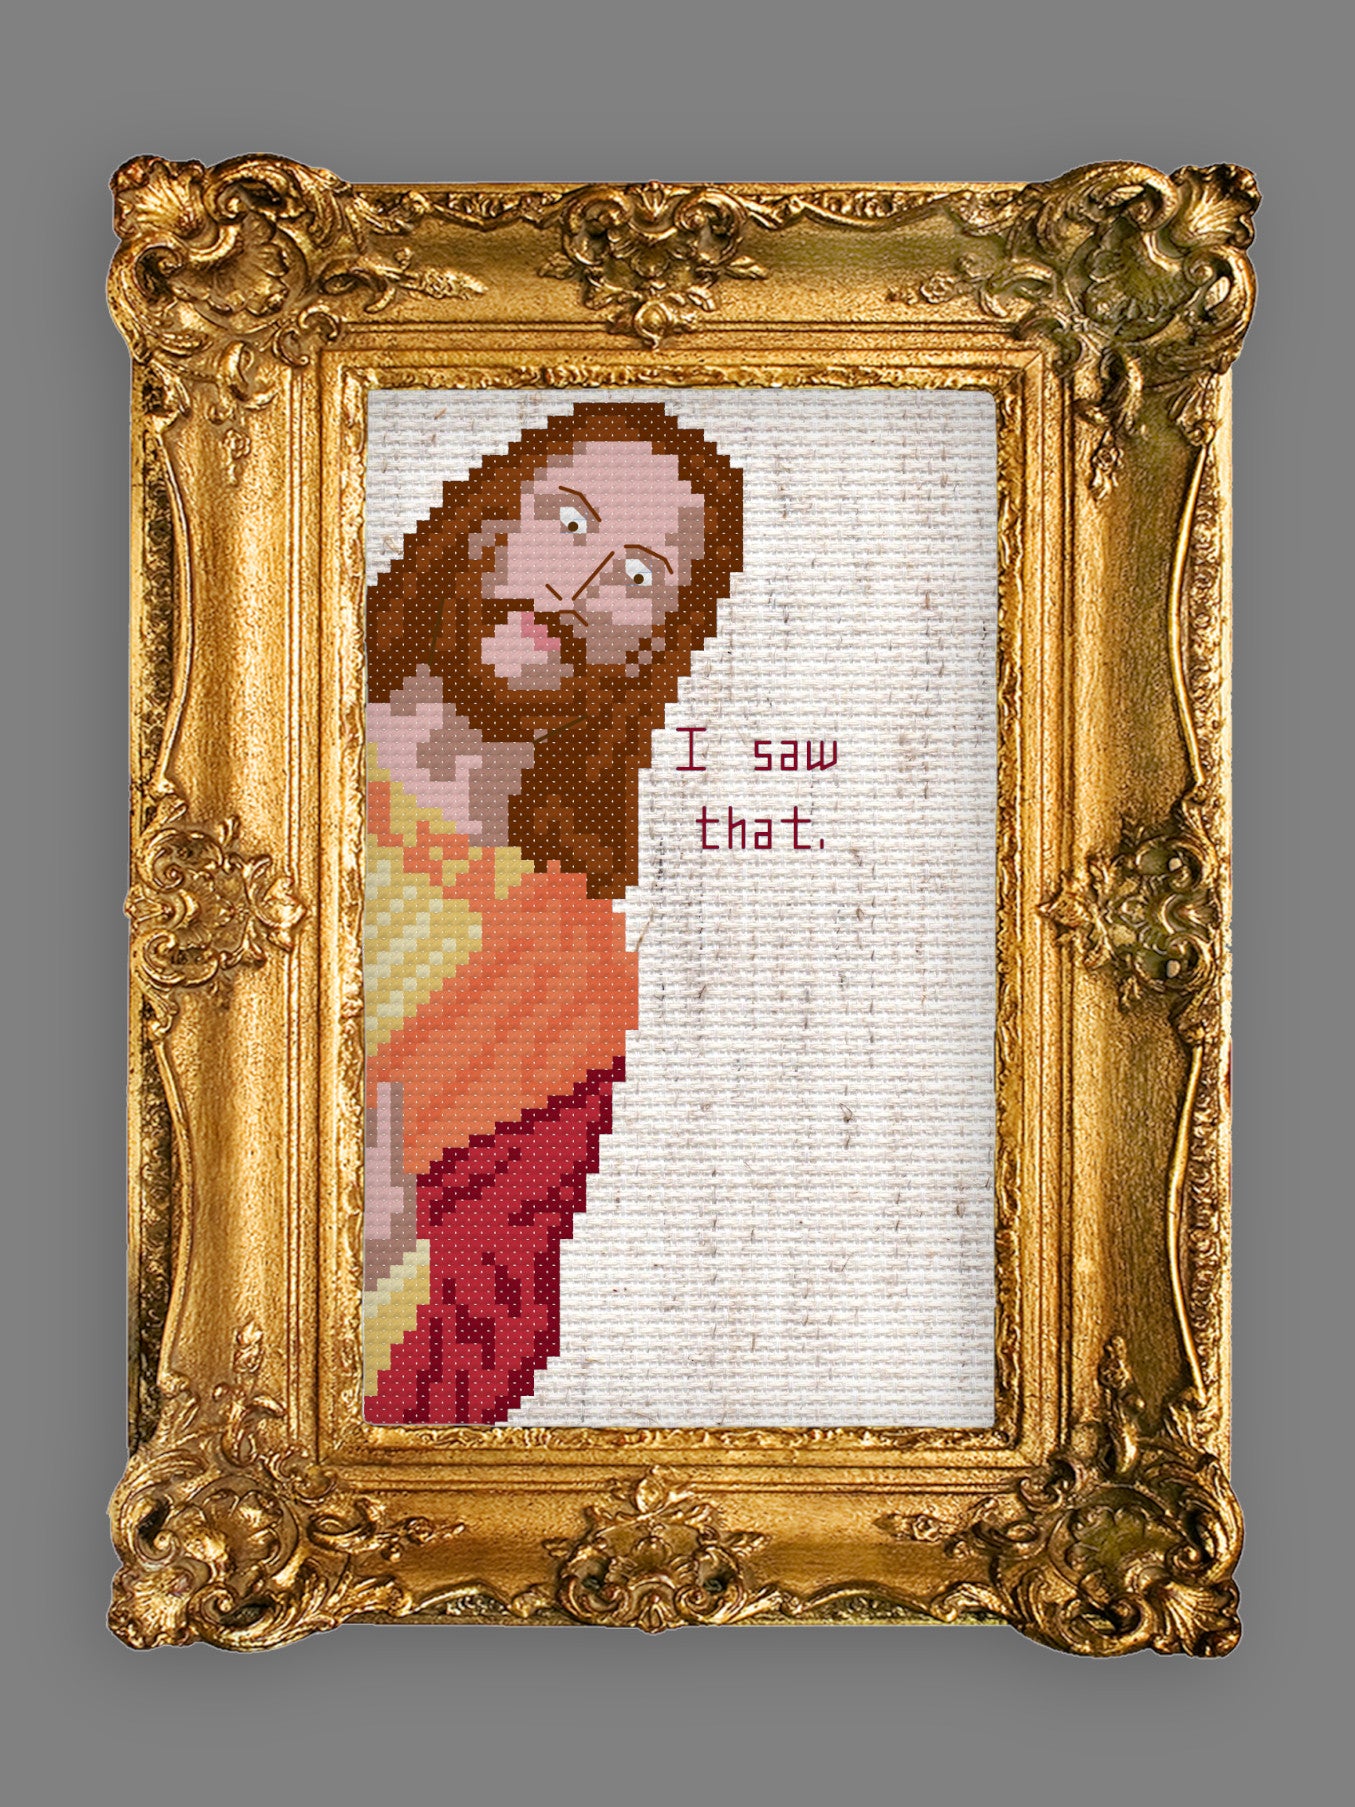 jesus on the cross memes